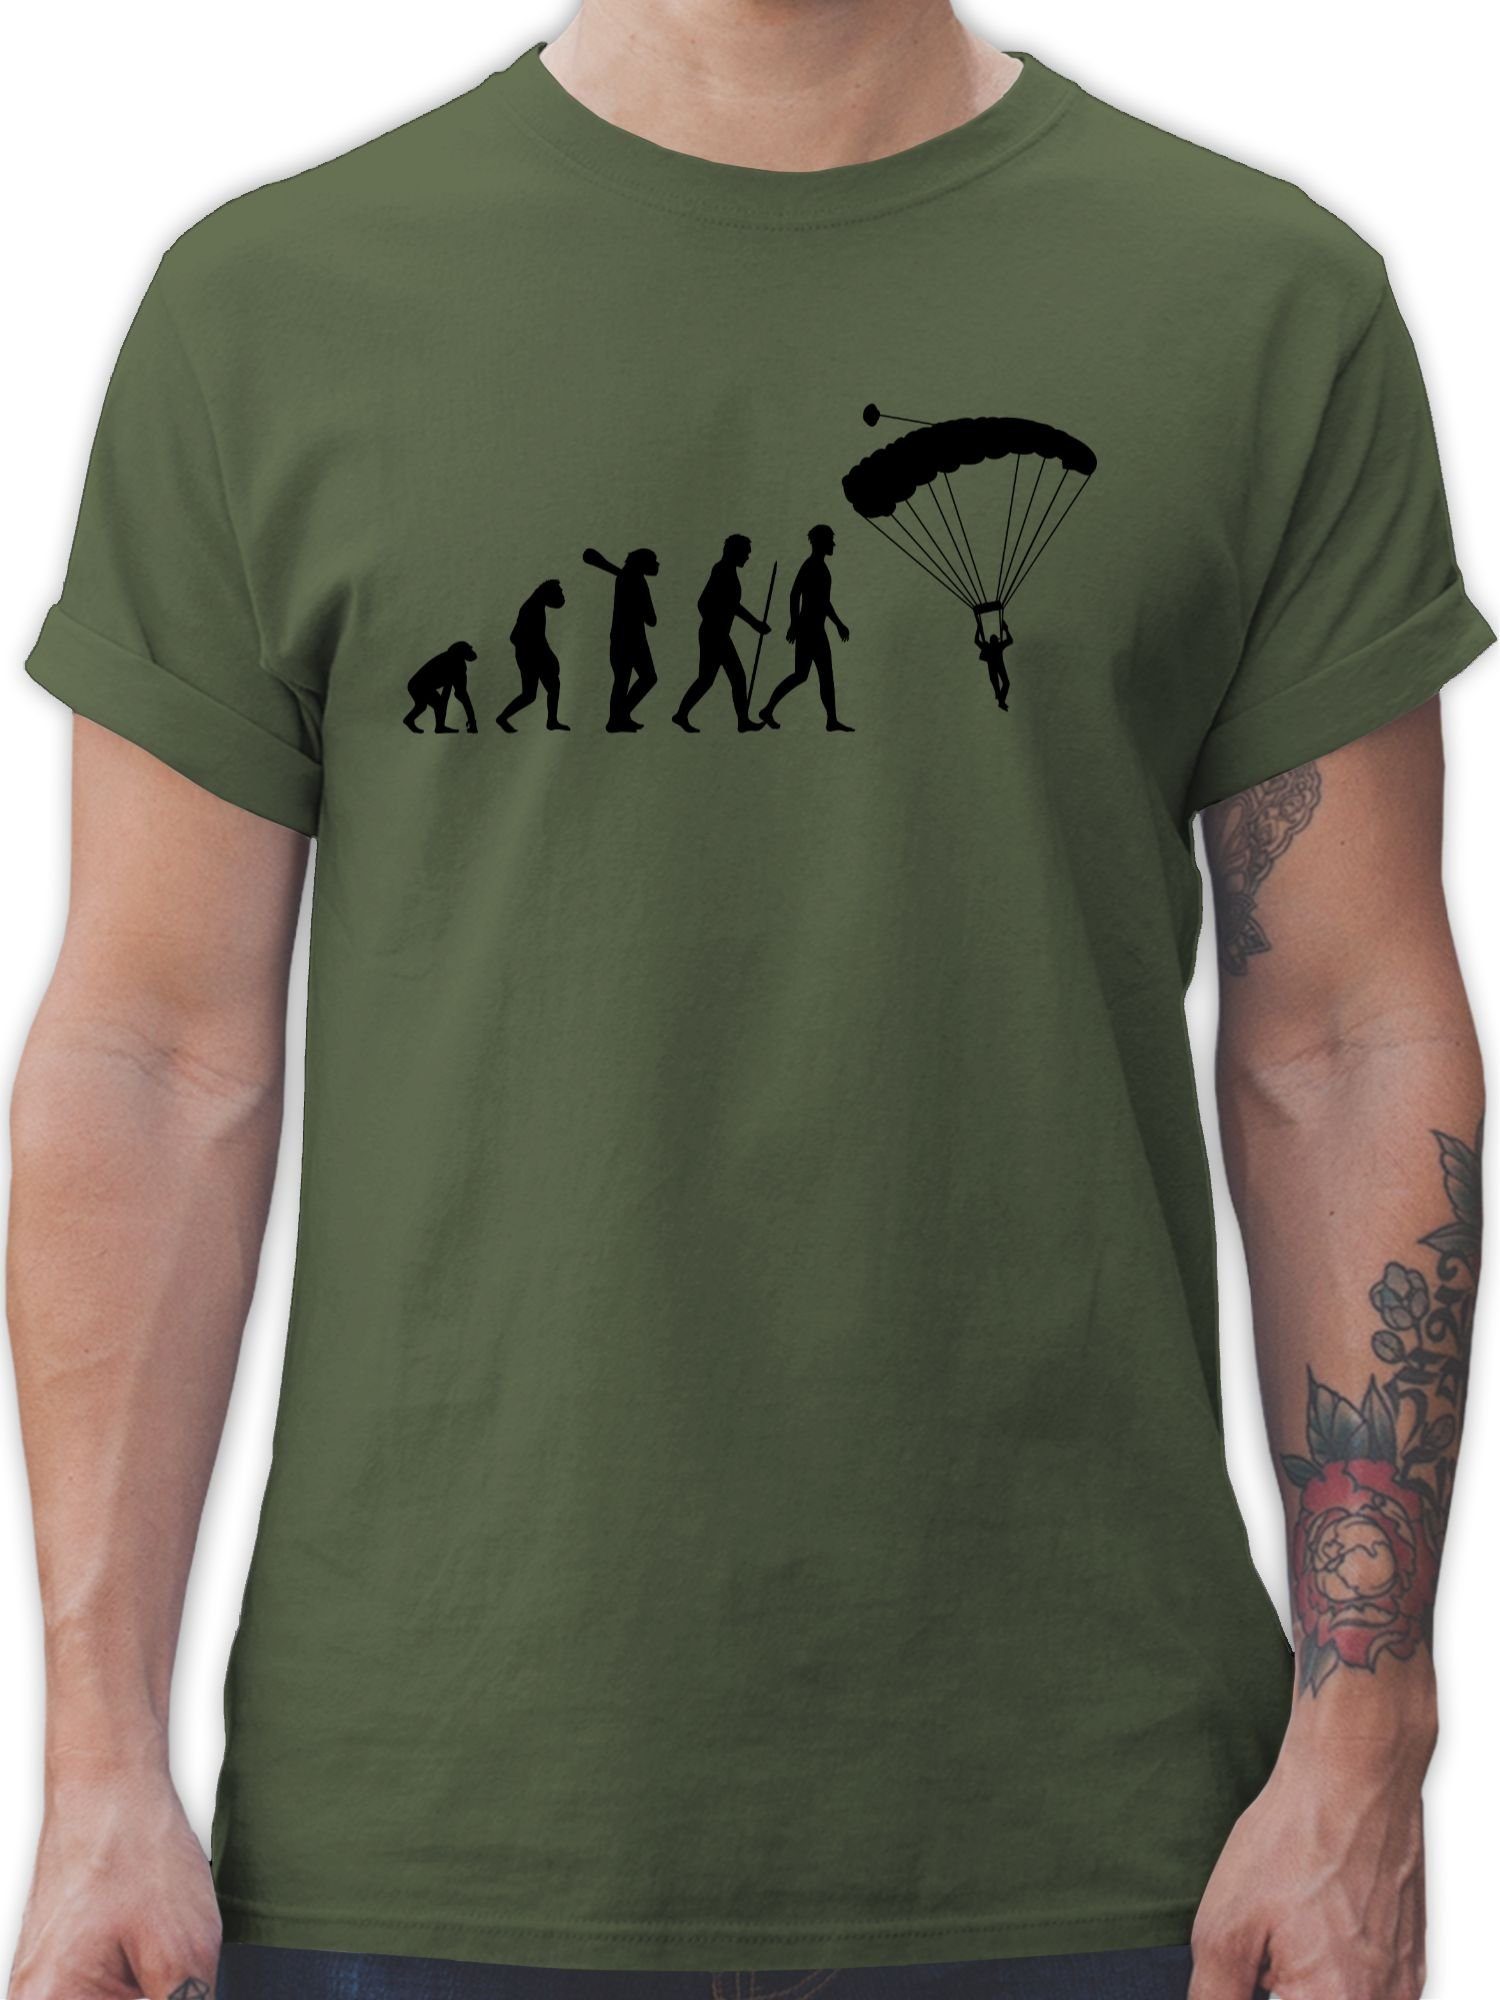 Shirtracer T-Shirt Fallschirmspringen Evolution Evolution Outfit 3 Army Grün